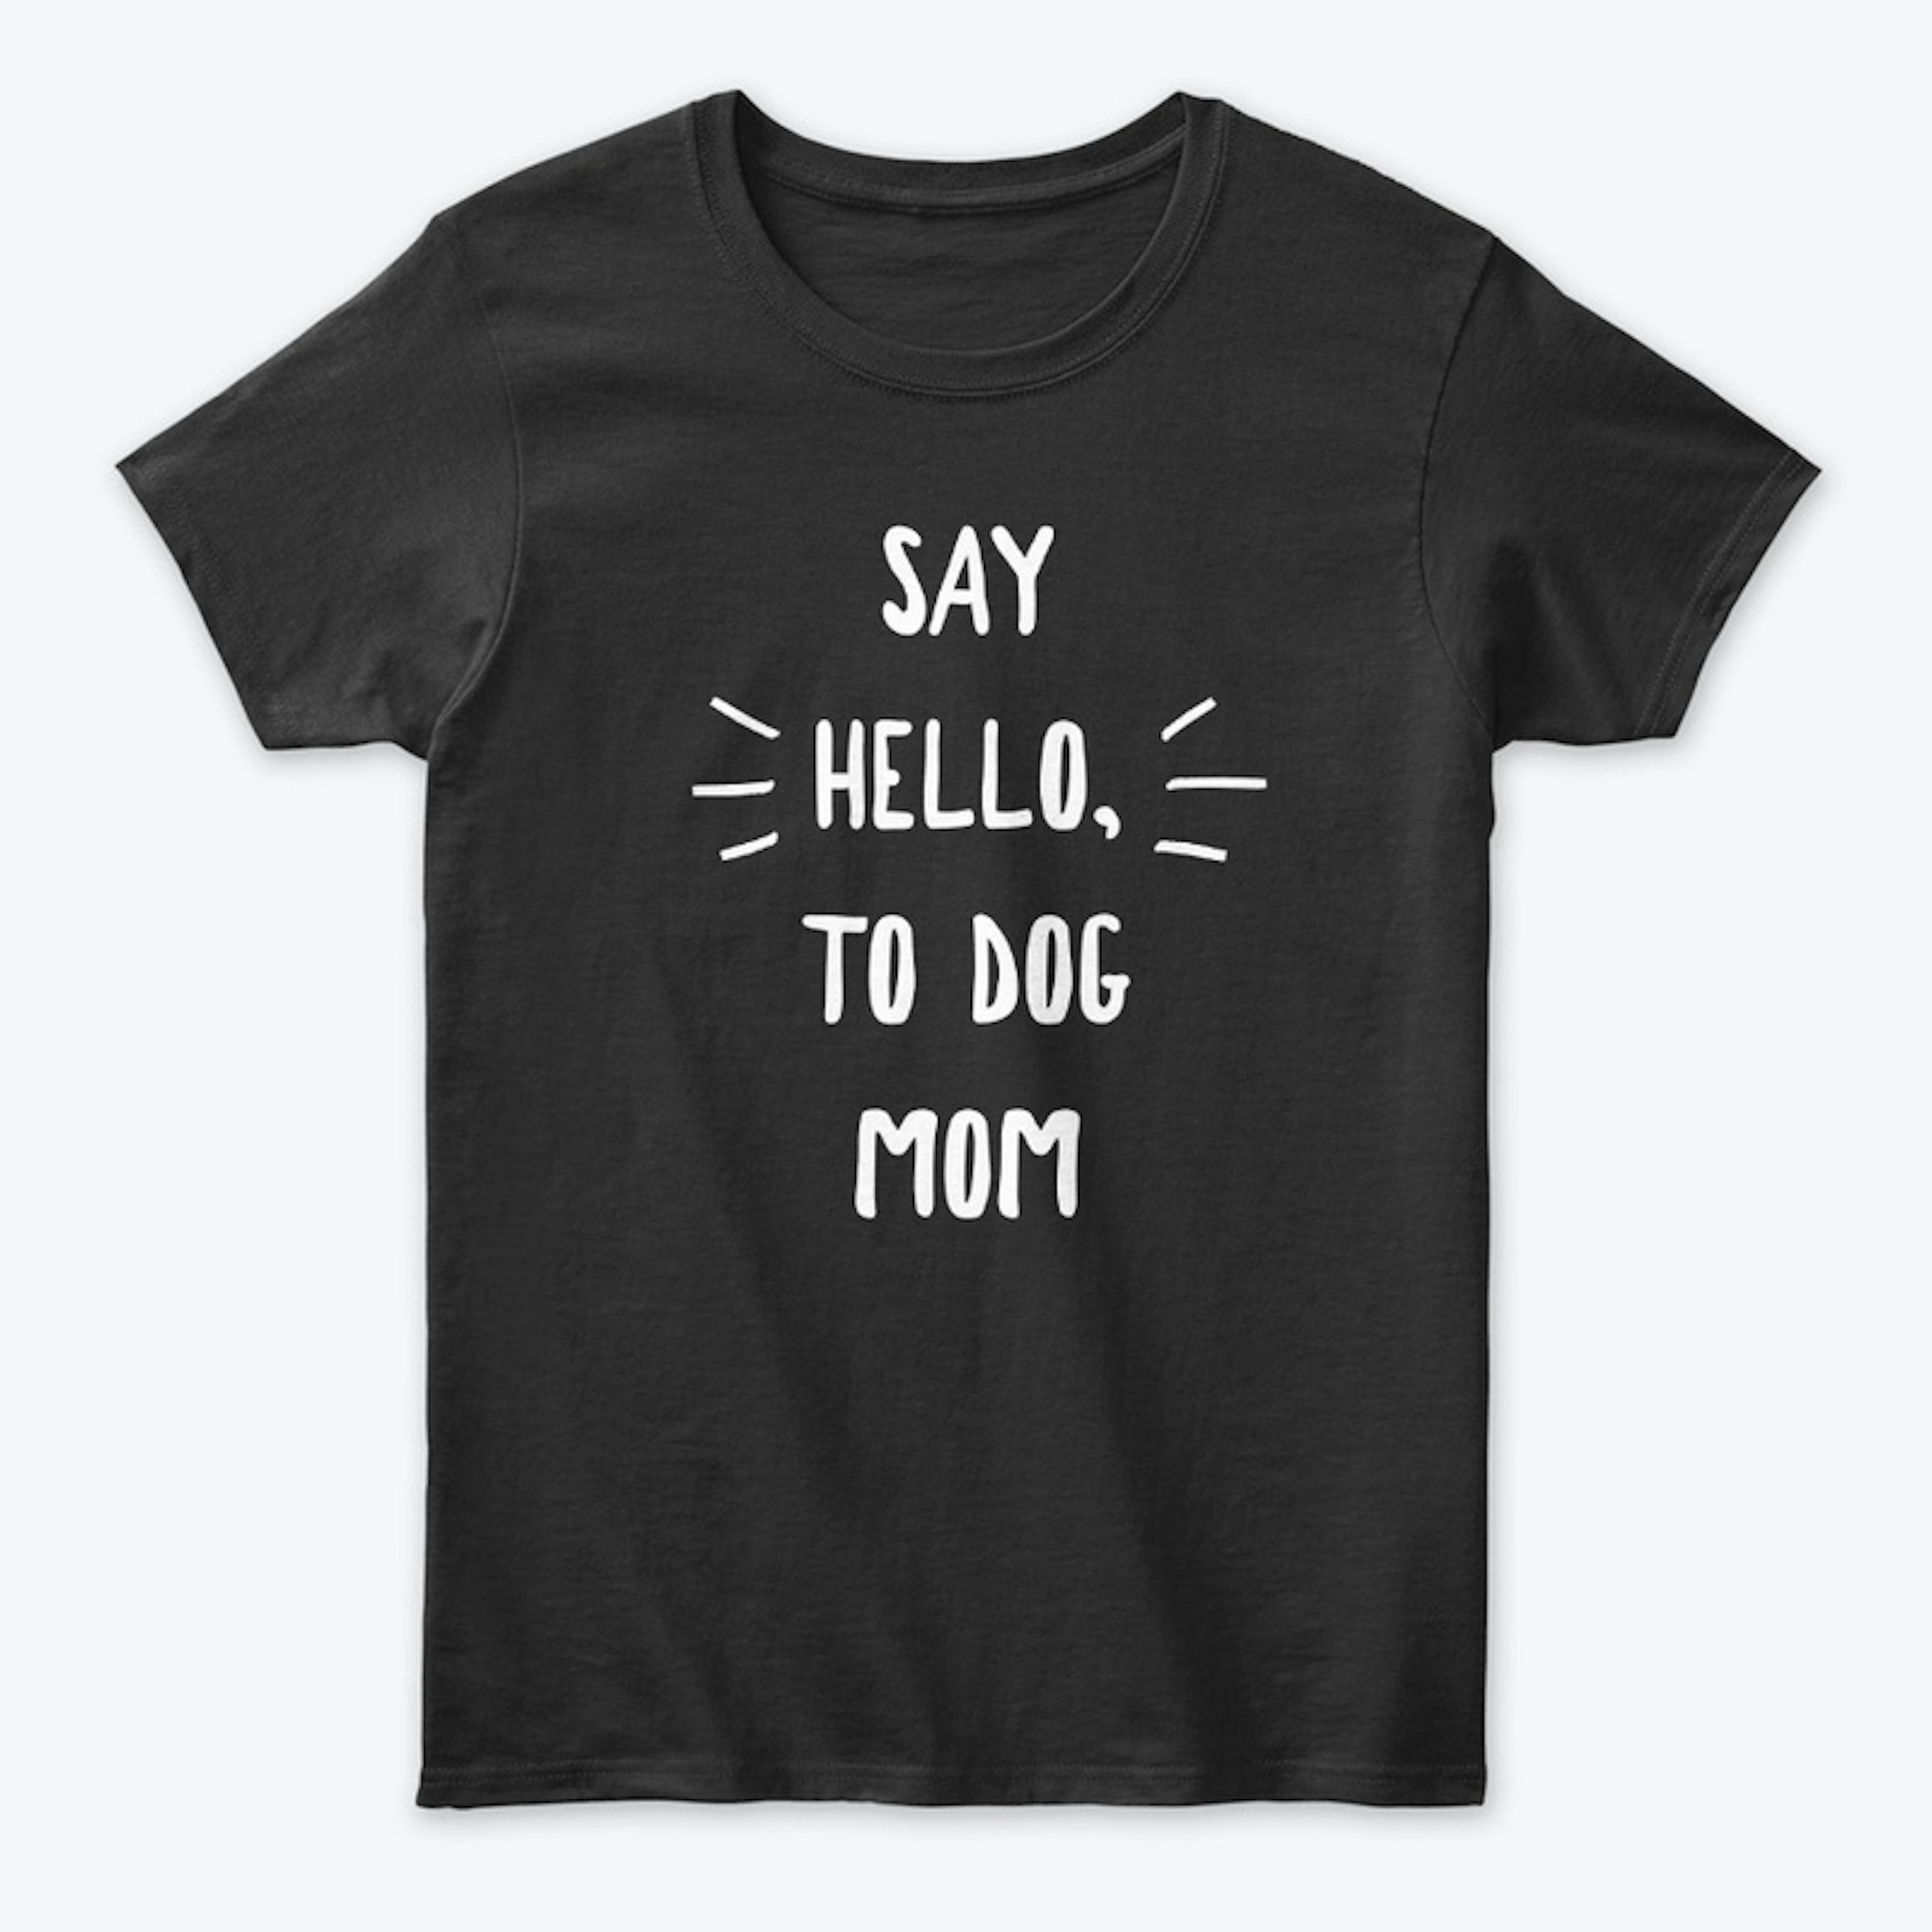 Say hello, to dog mom